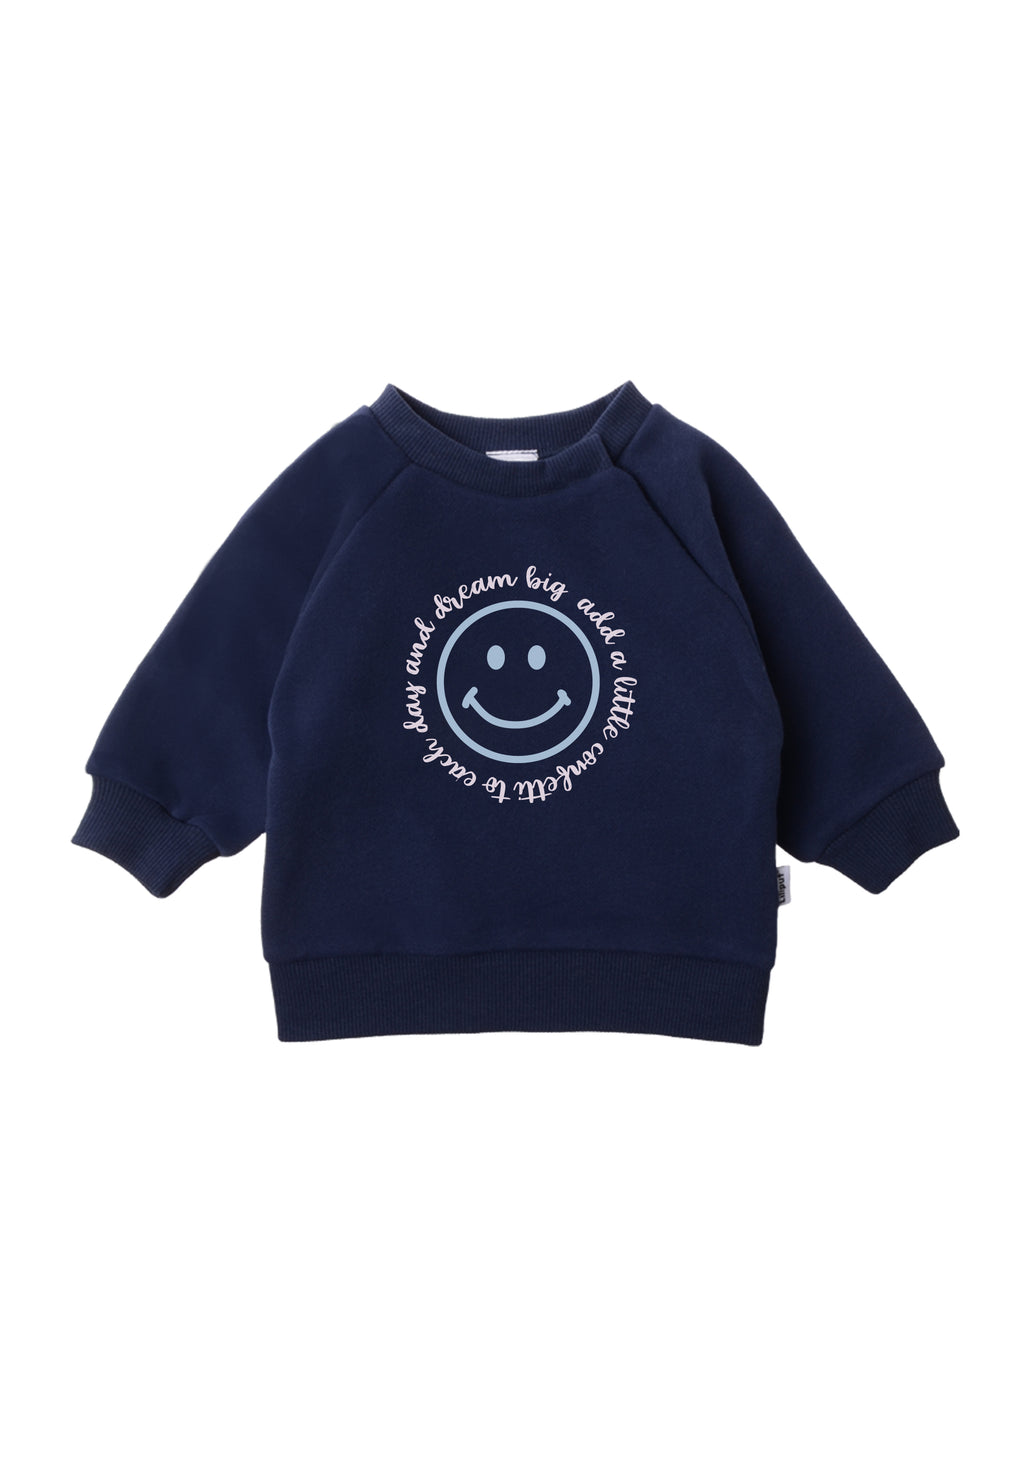 Sweatshirt in blau mit Smiley Print und Wording "add a little confetti to each day and dream big"